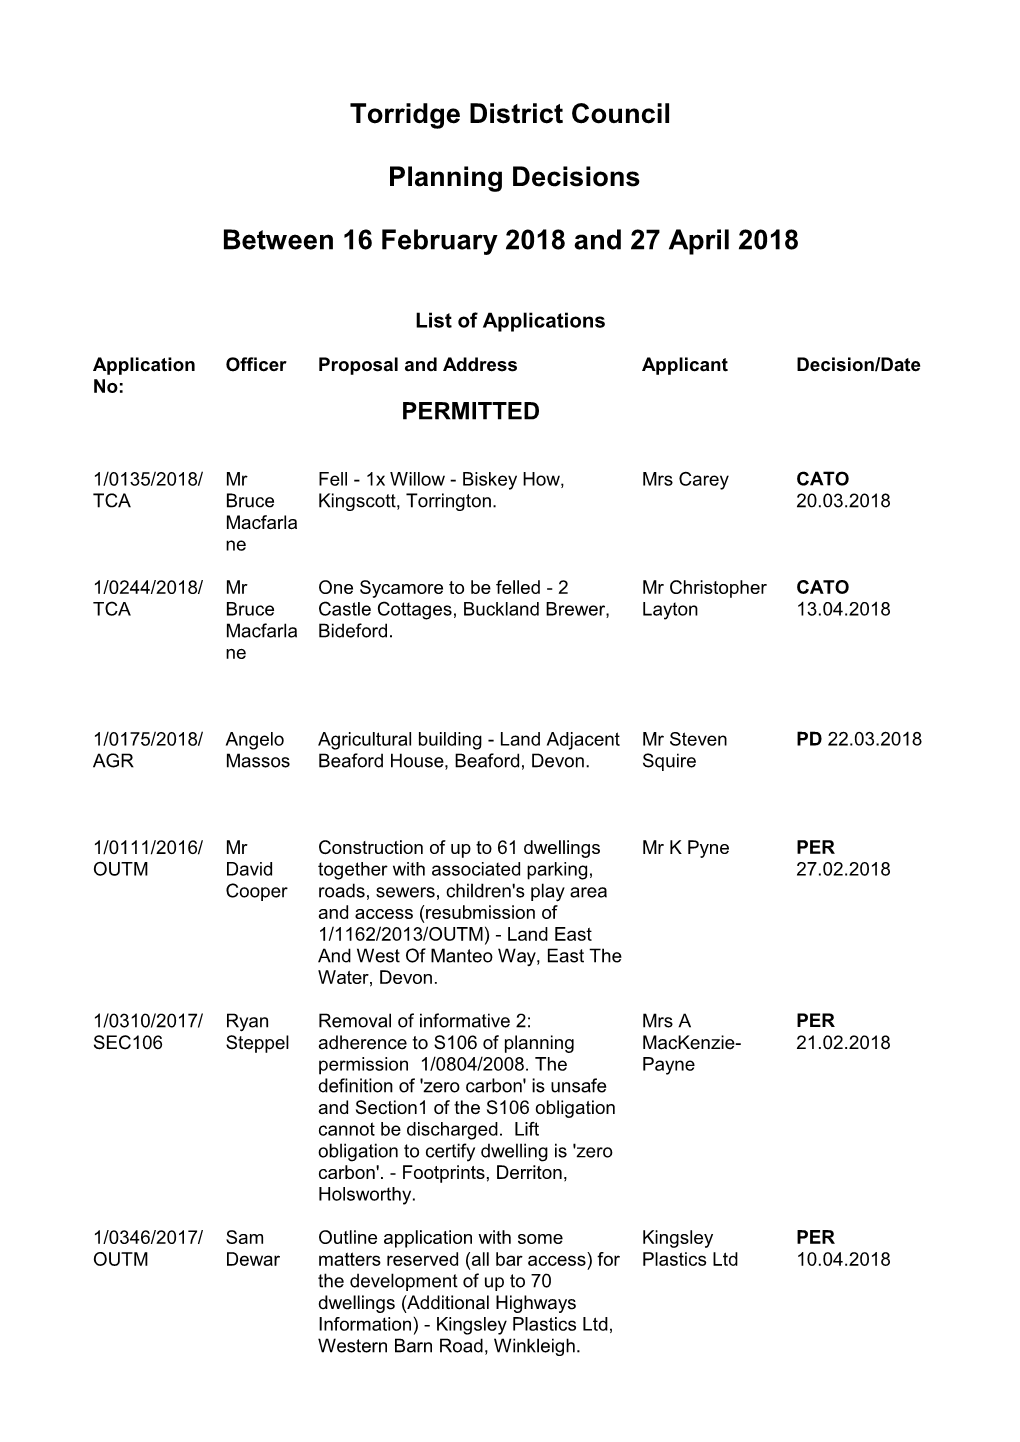 Torridge District Council Planning Decisions Between 16 February